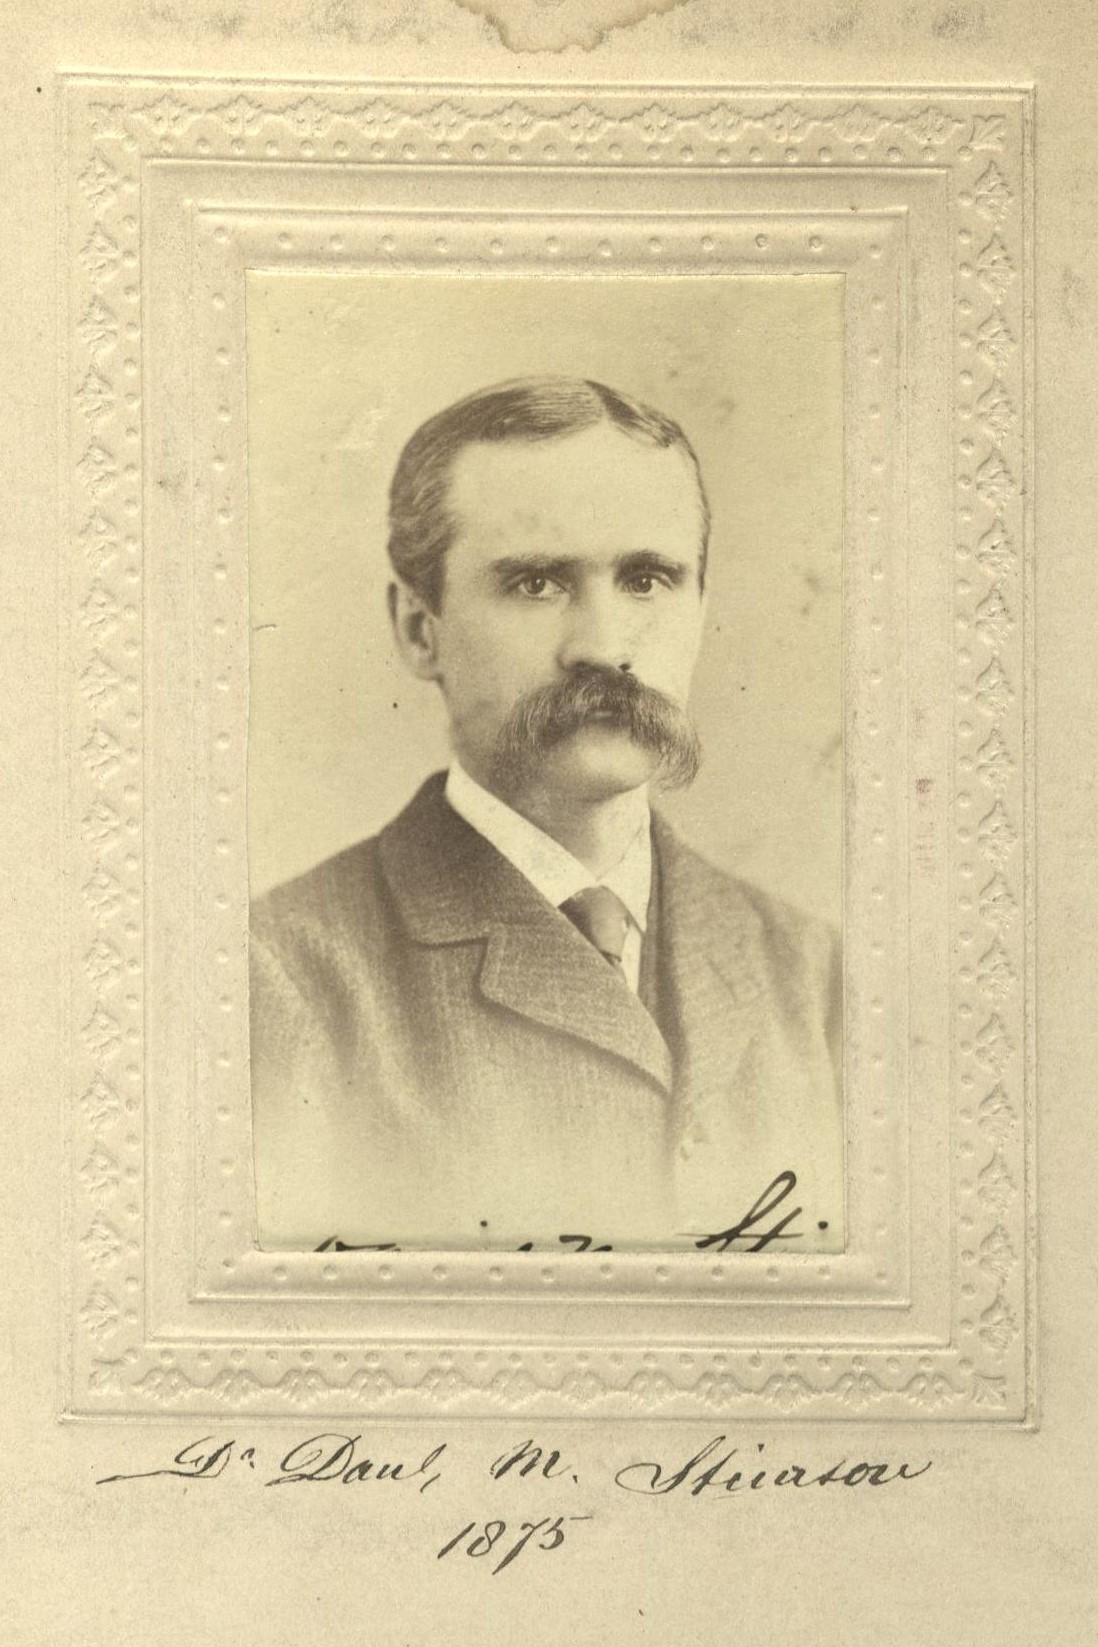 Member portrait of Daniel M. Stimson